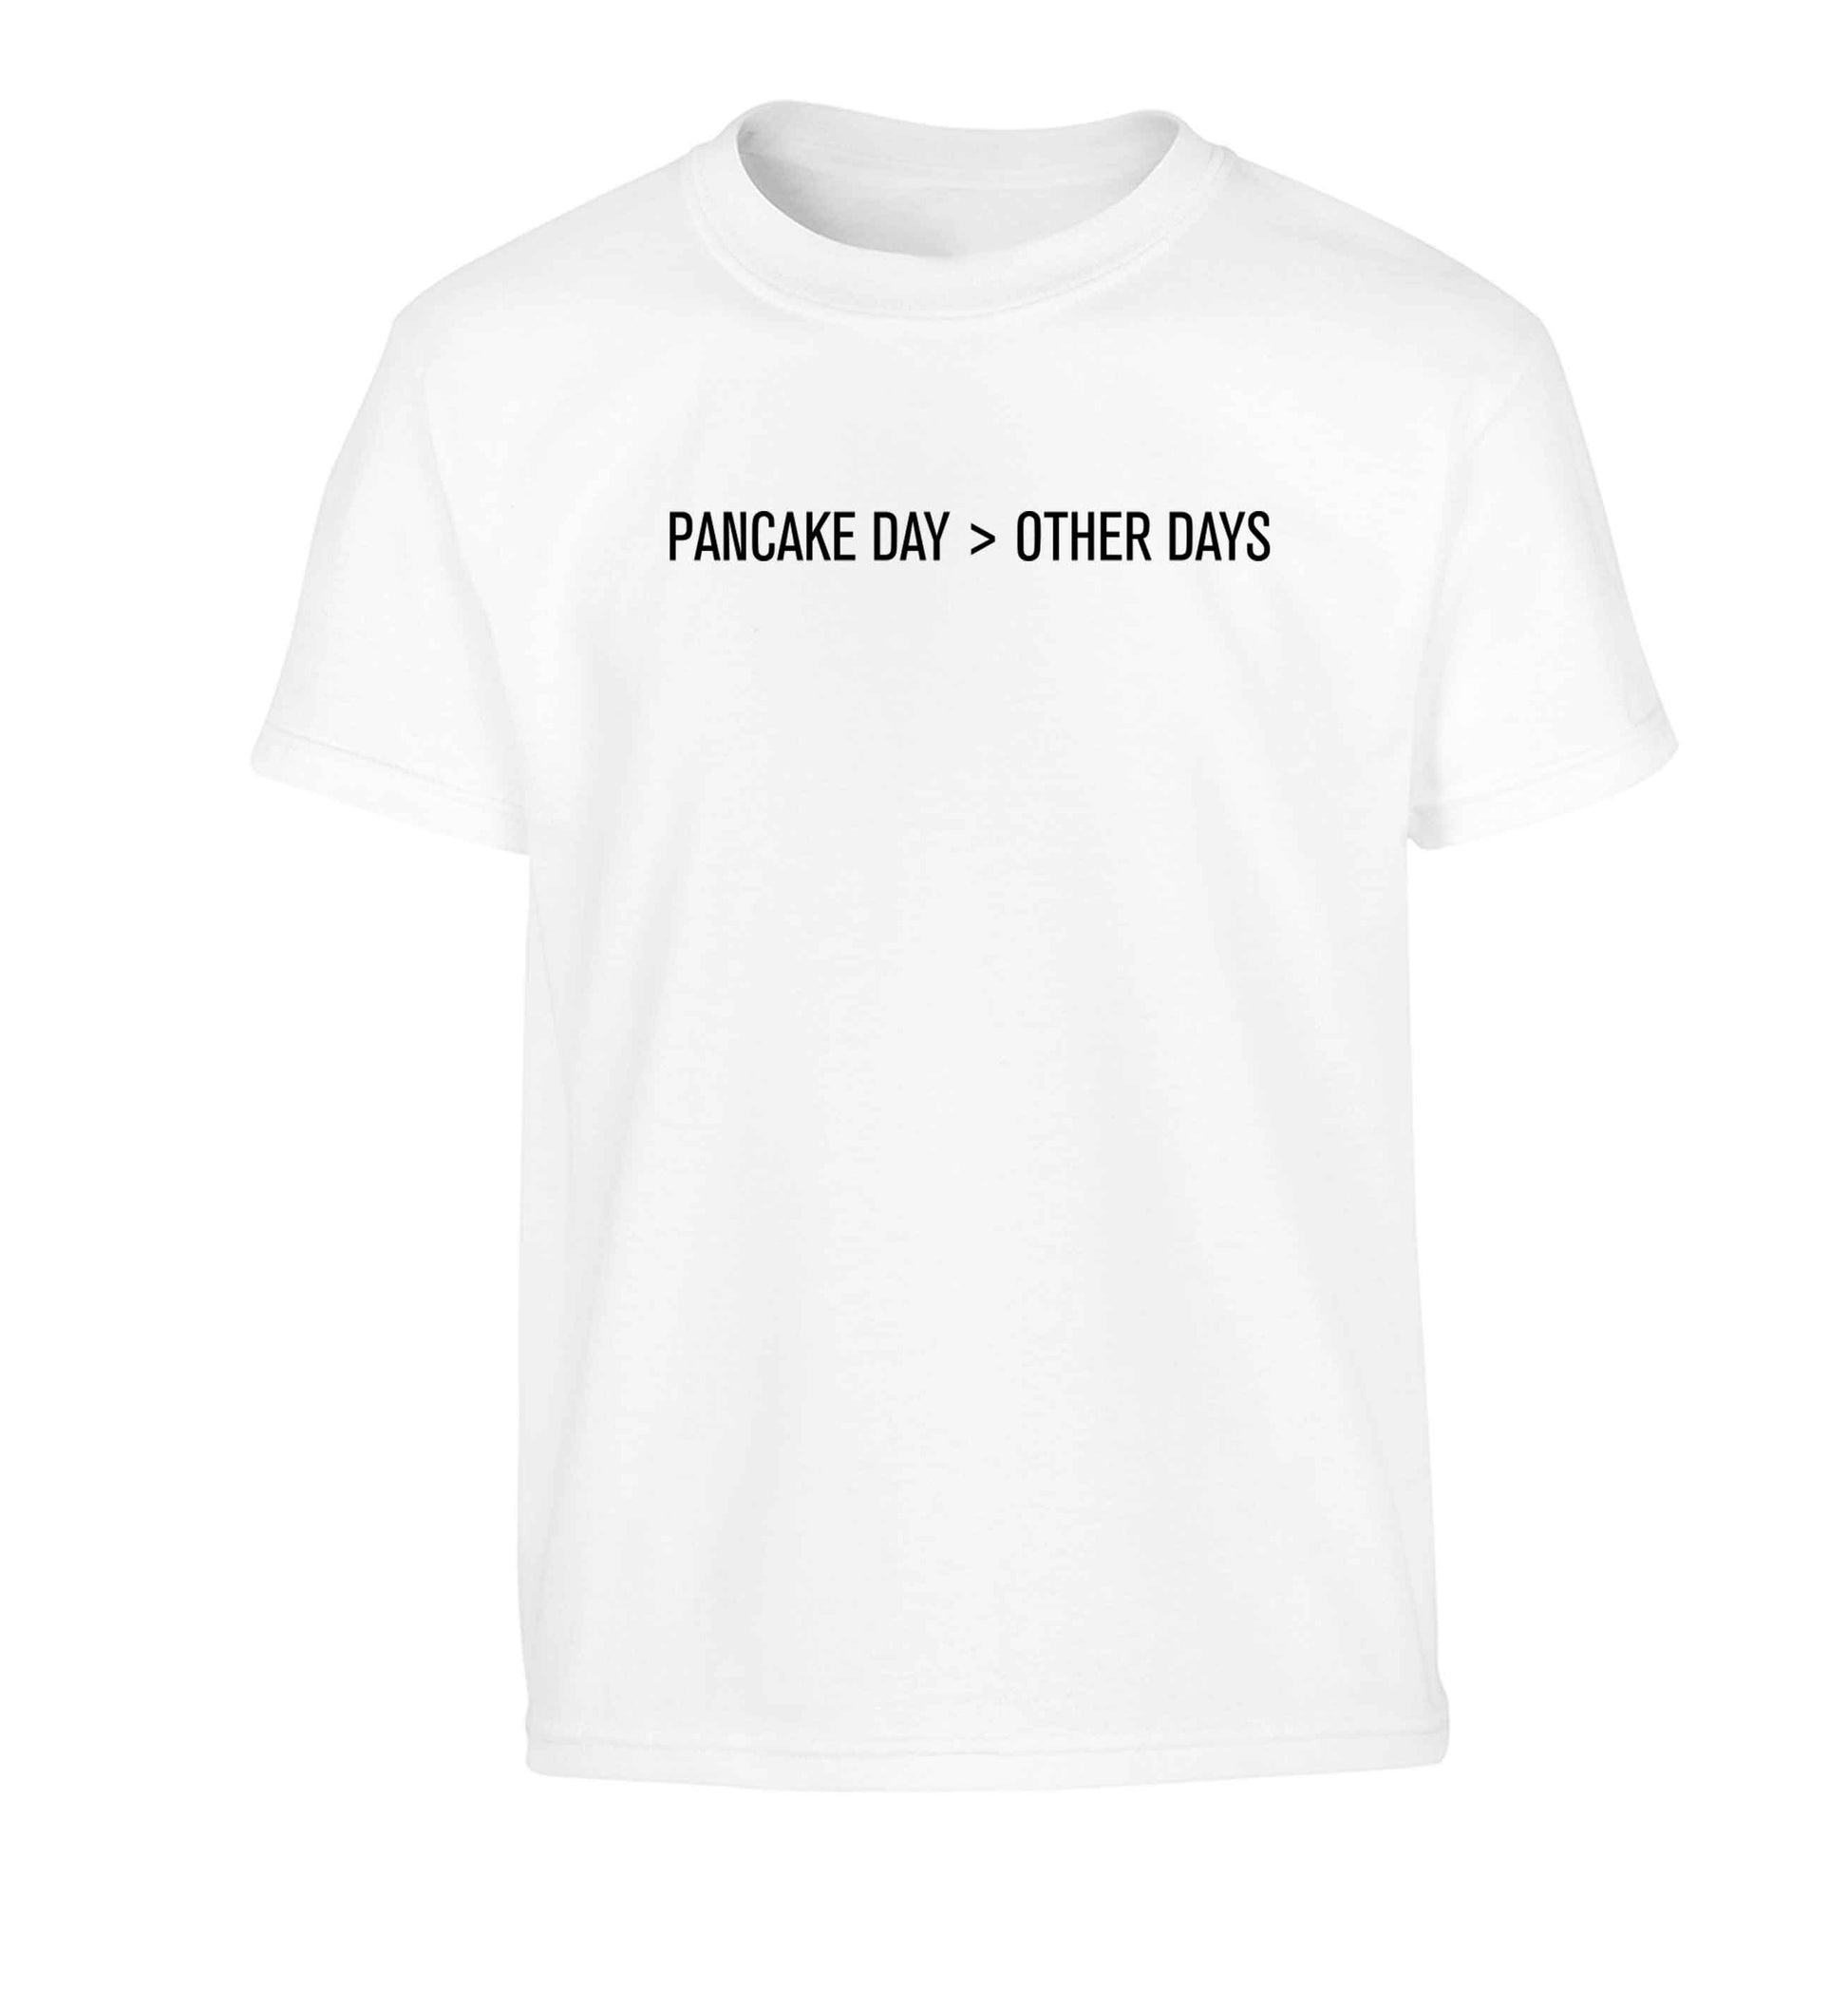 Pancake day > other days Children's white Tshirt 12-13 Years